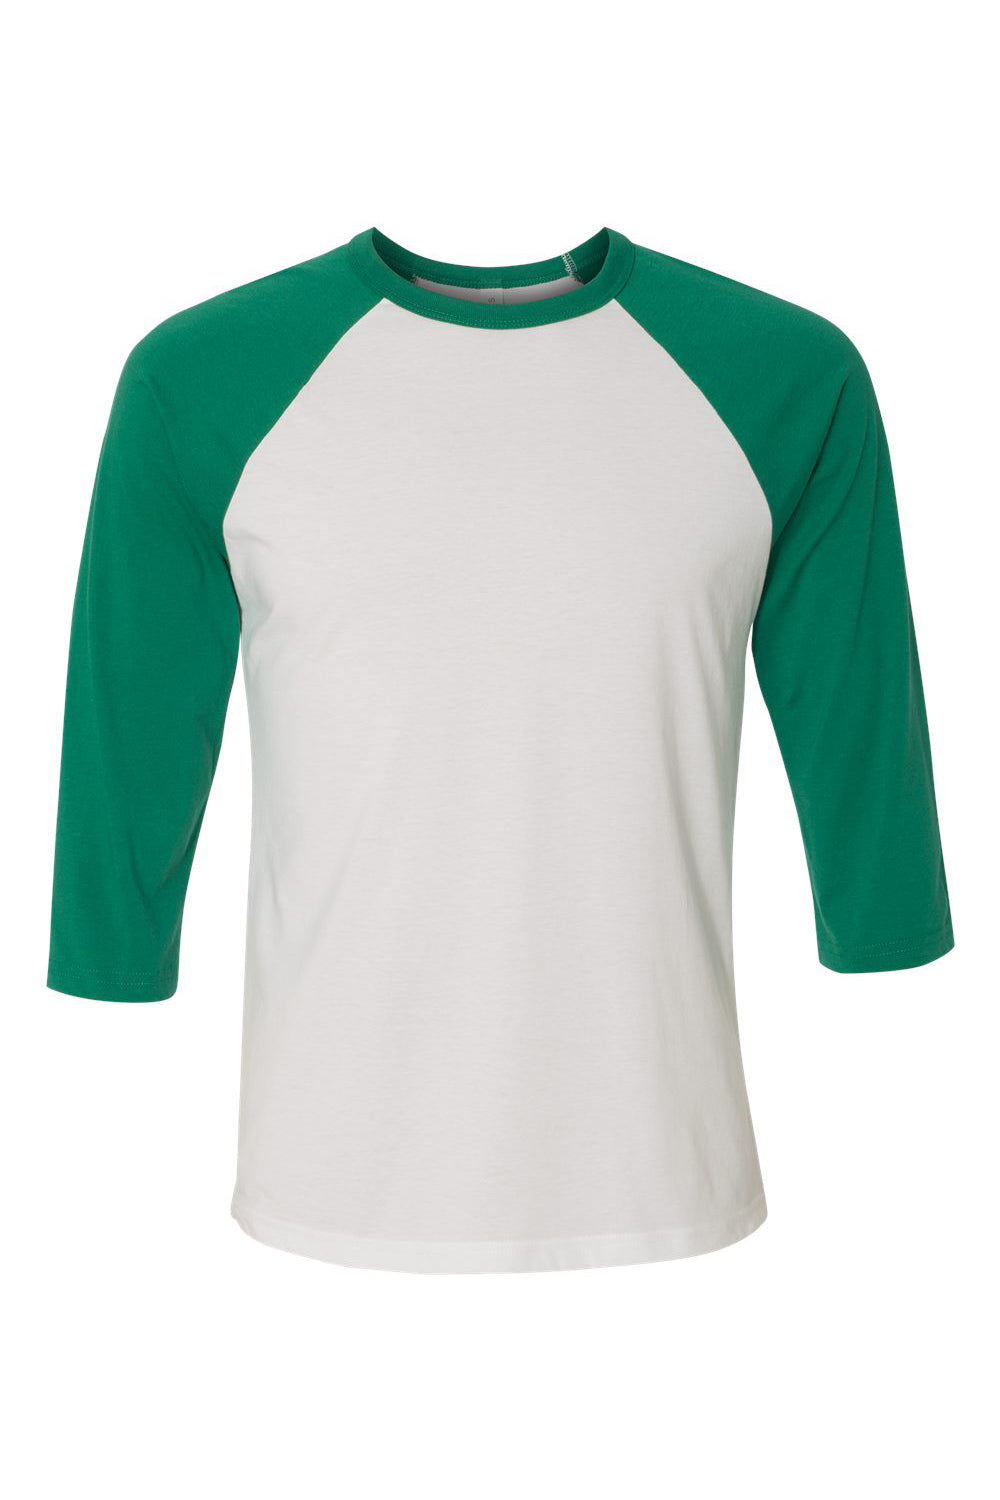 Bella + Canvas BC3200/3200 Mens 3/4 Sleeve Crewneck T-Shirt White/Kelly Green Flat Front